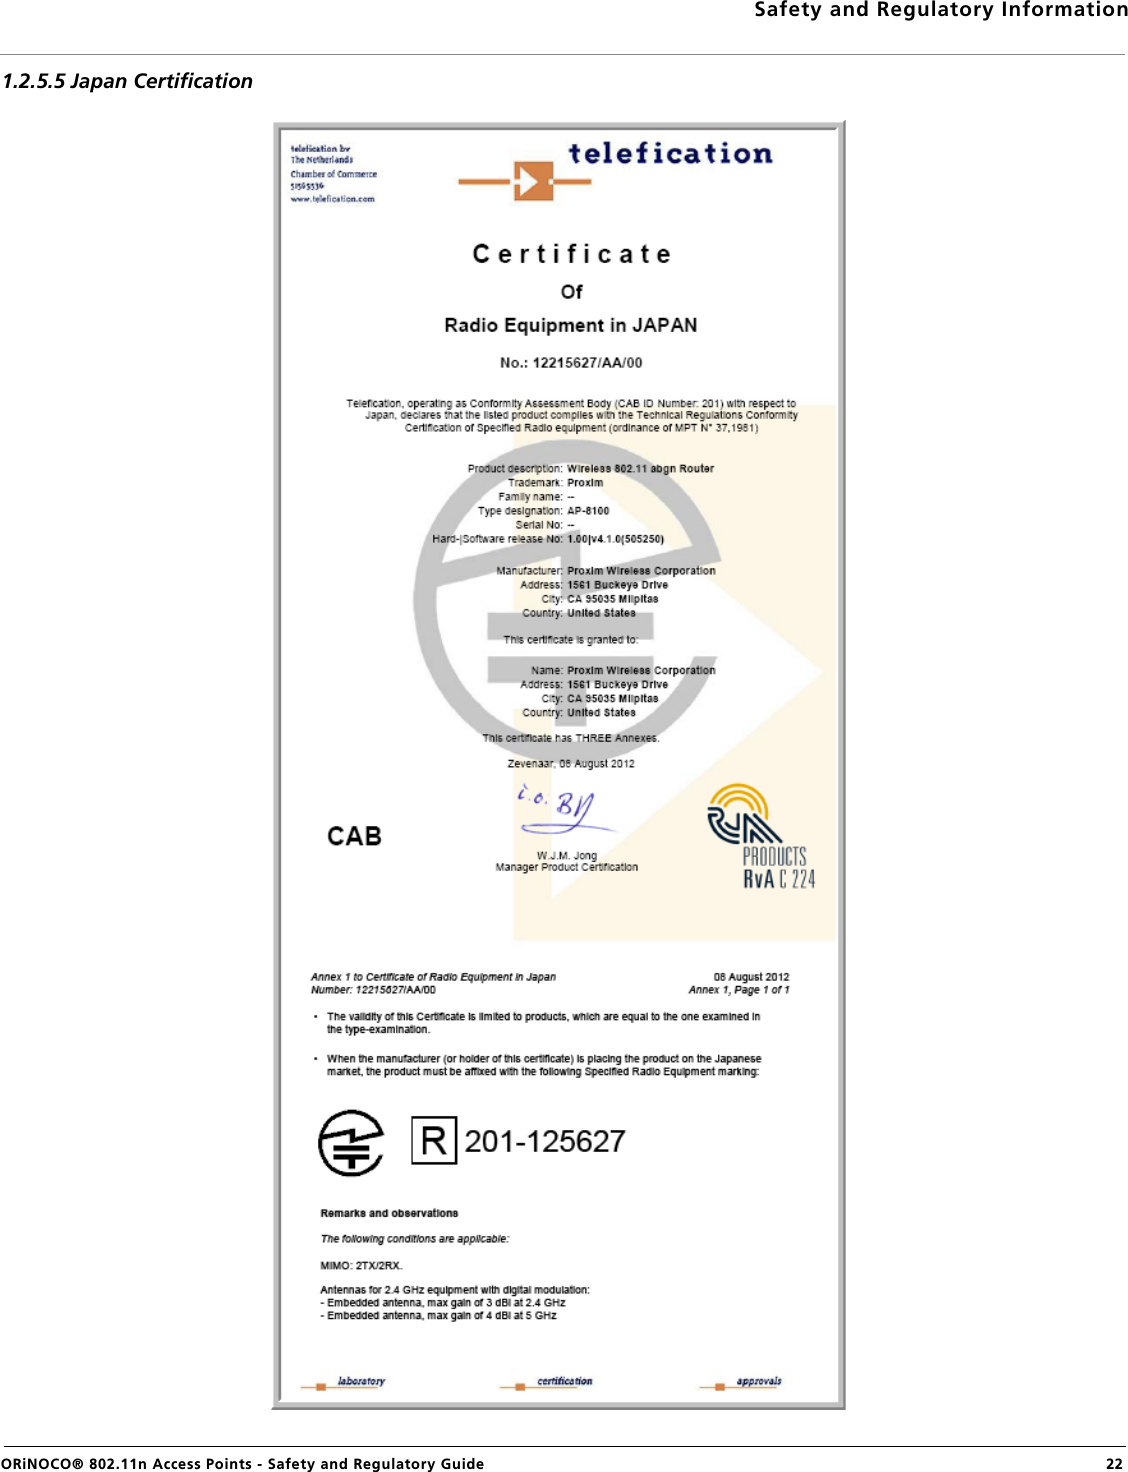 Safety and Regulatory InformationORiNOCO® 802.11n Access Points - Safety and Regulatory Guide  221.2.5.5 Japan Certification